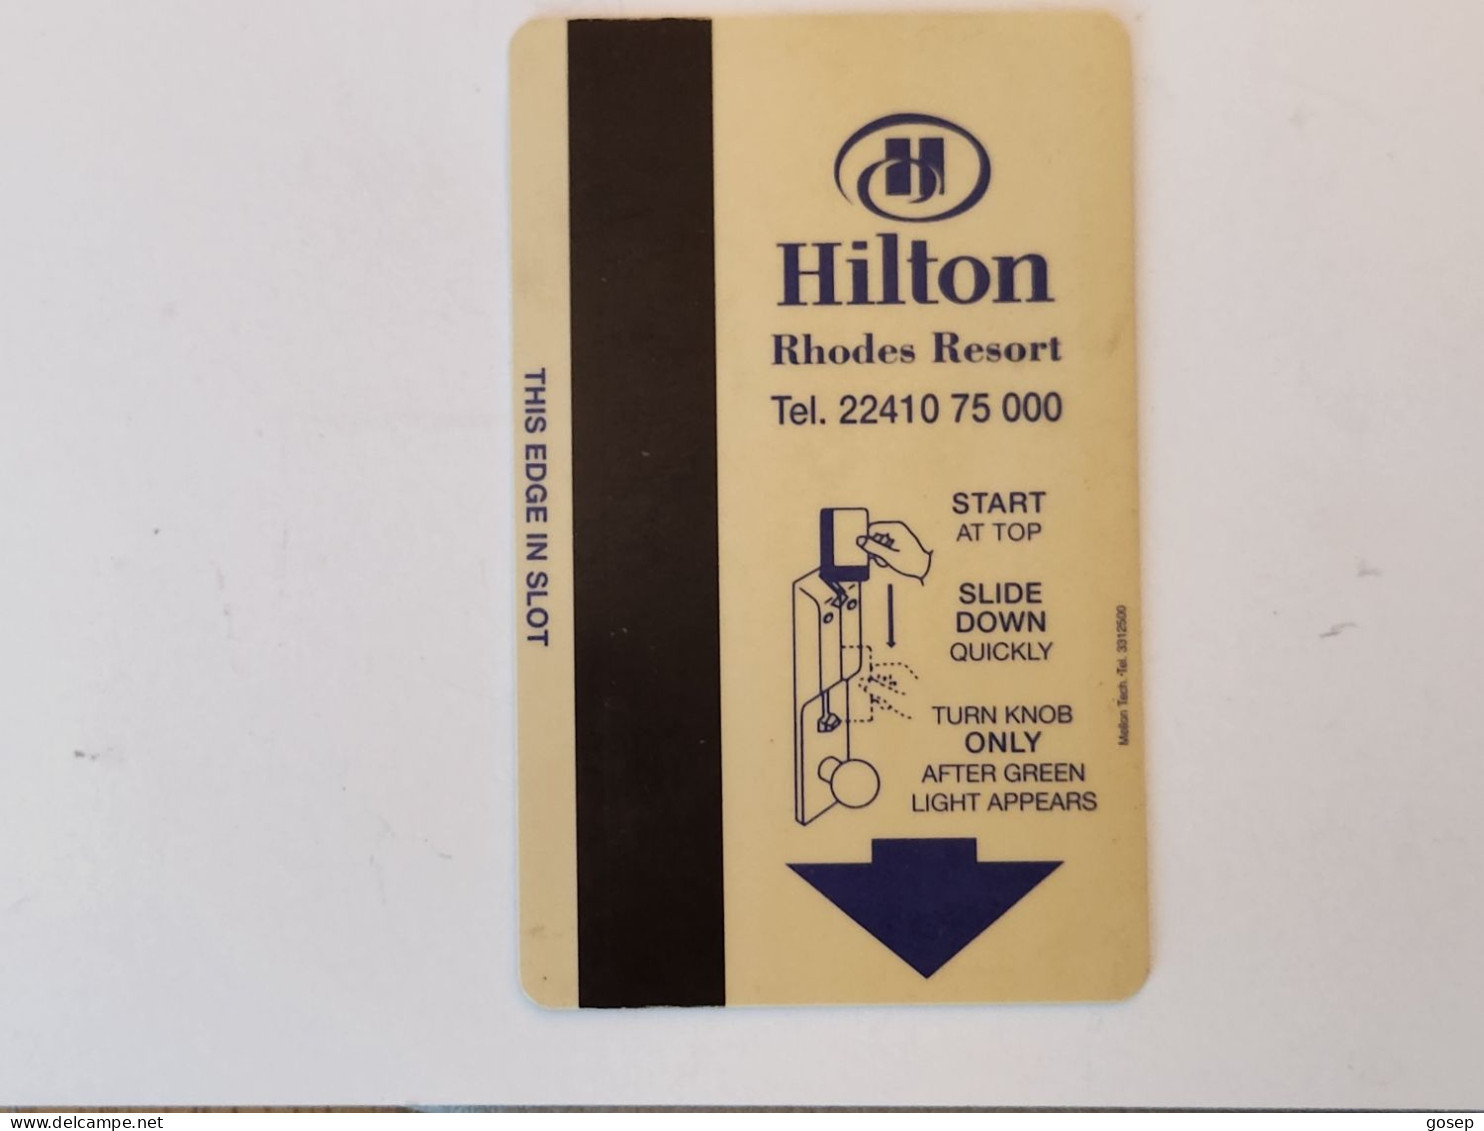 ISRAEL-HILLTON-HOTAL KEY-(1095)(?)GOOD CARD - Hotelsleutels (kaarten)